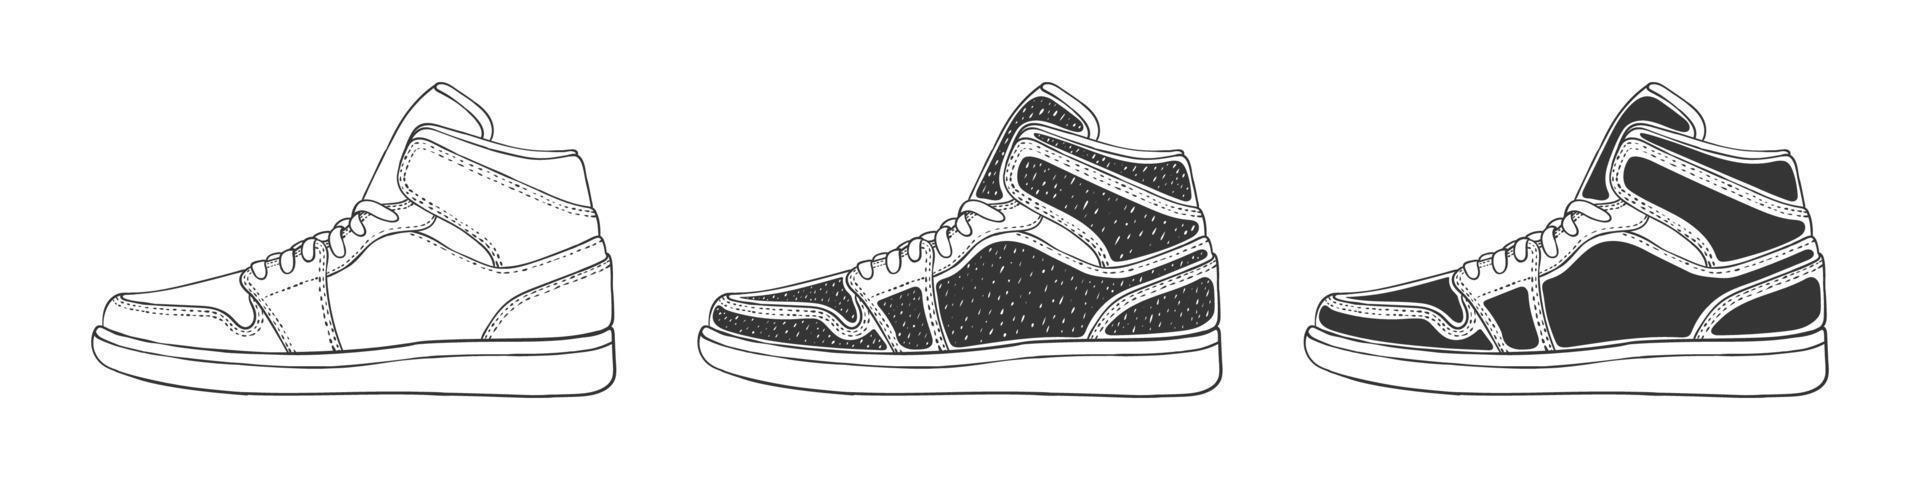 conjunto de zapatillas modernas. iconos de zapatillas. calzado de moda. zapatos de estilo dibujados a mano. imagen vectorial vector